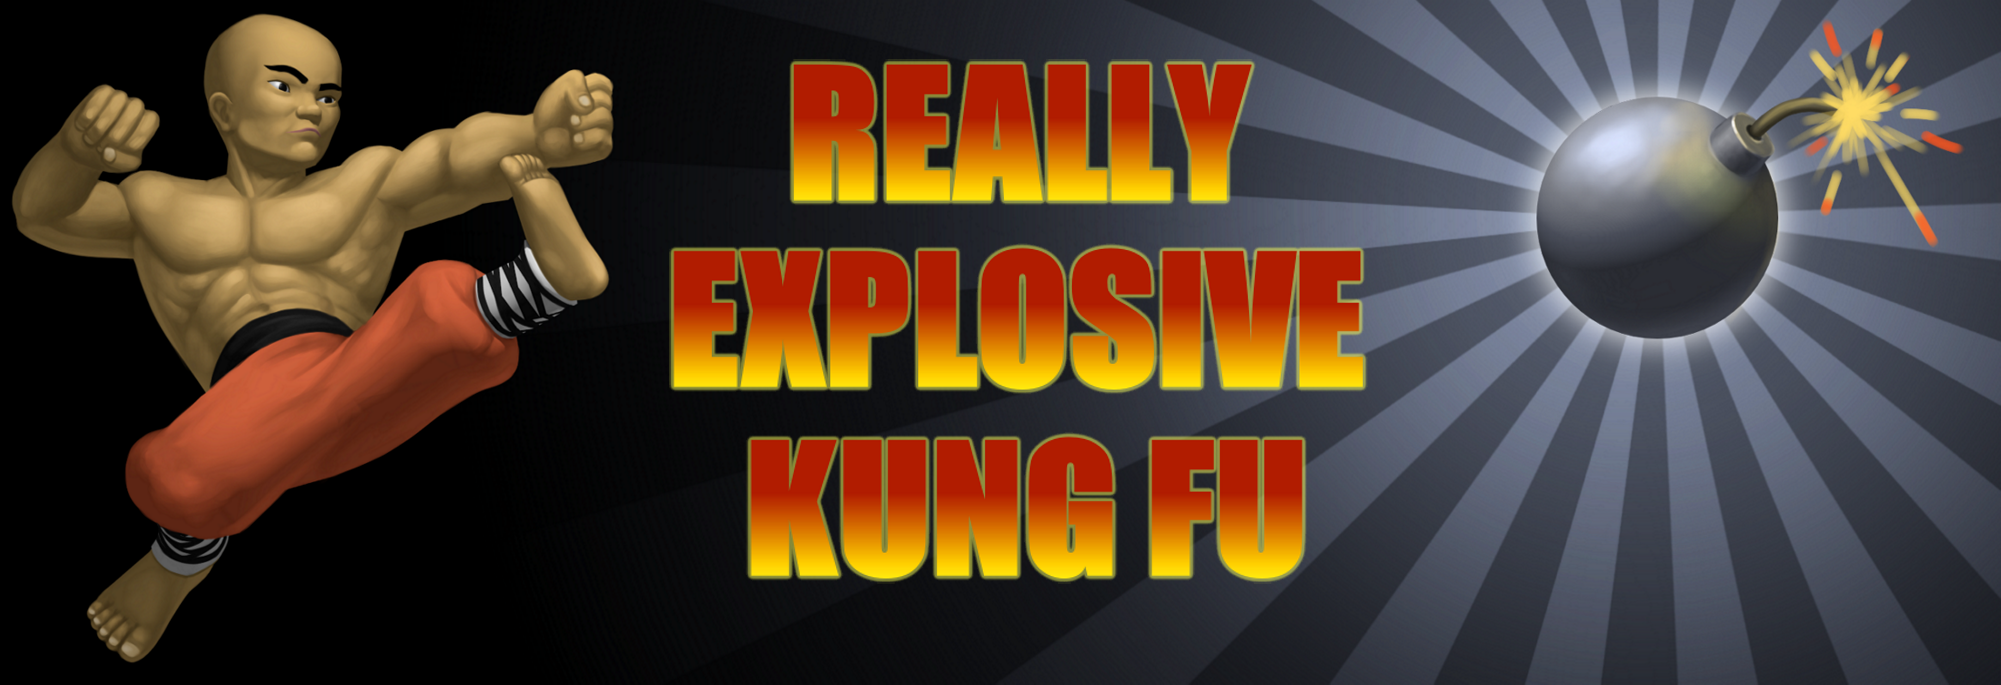 Really Explosive Kung Fu